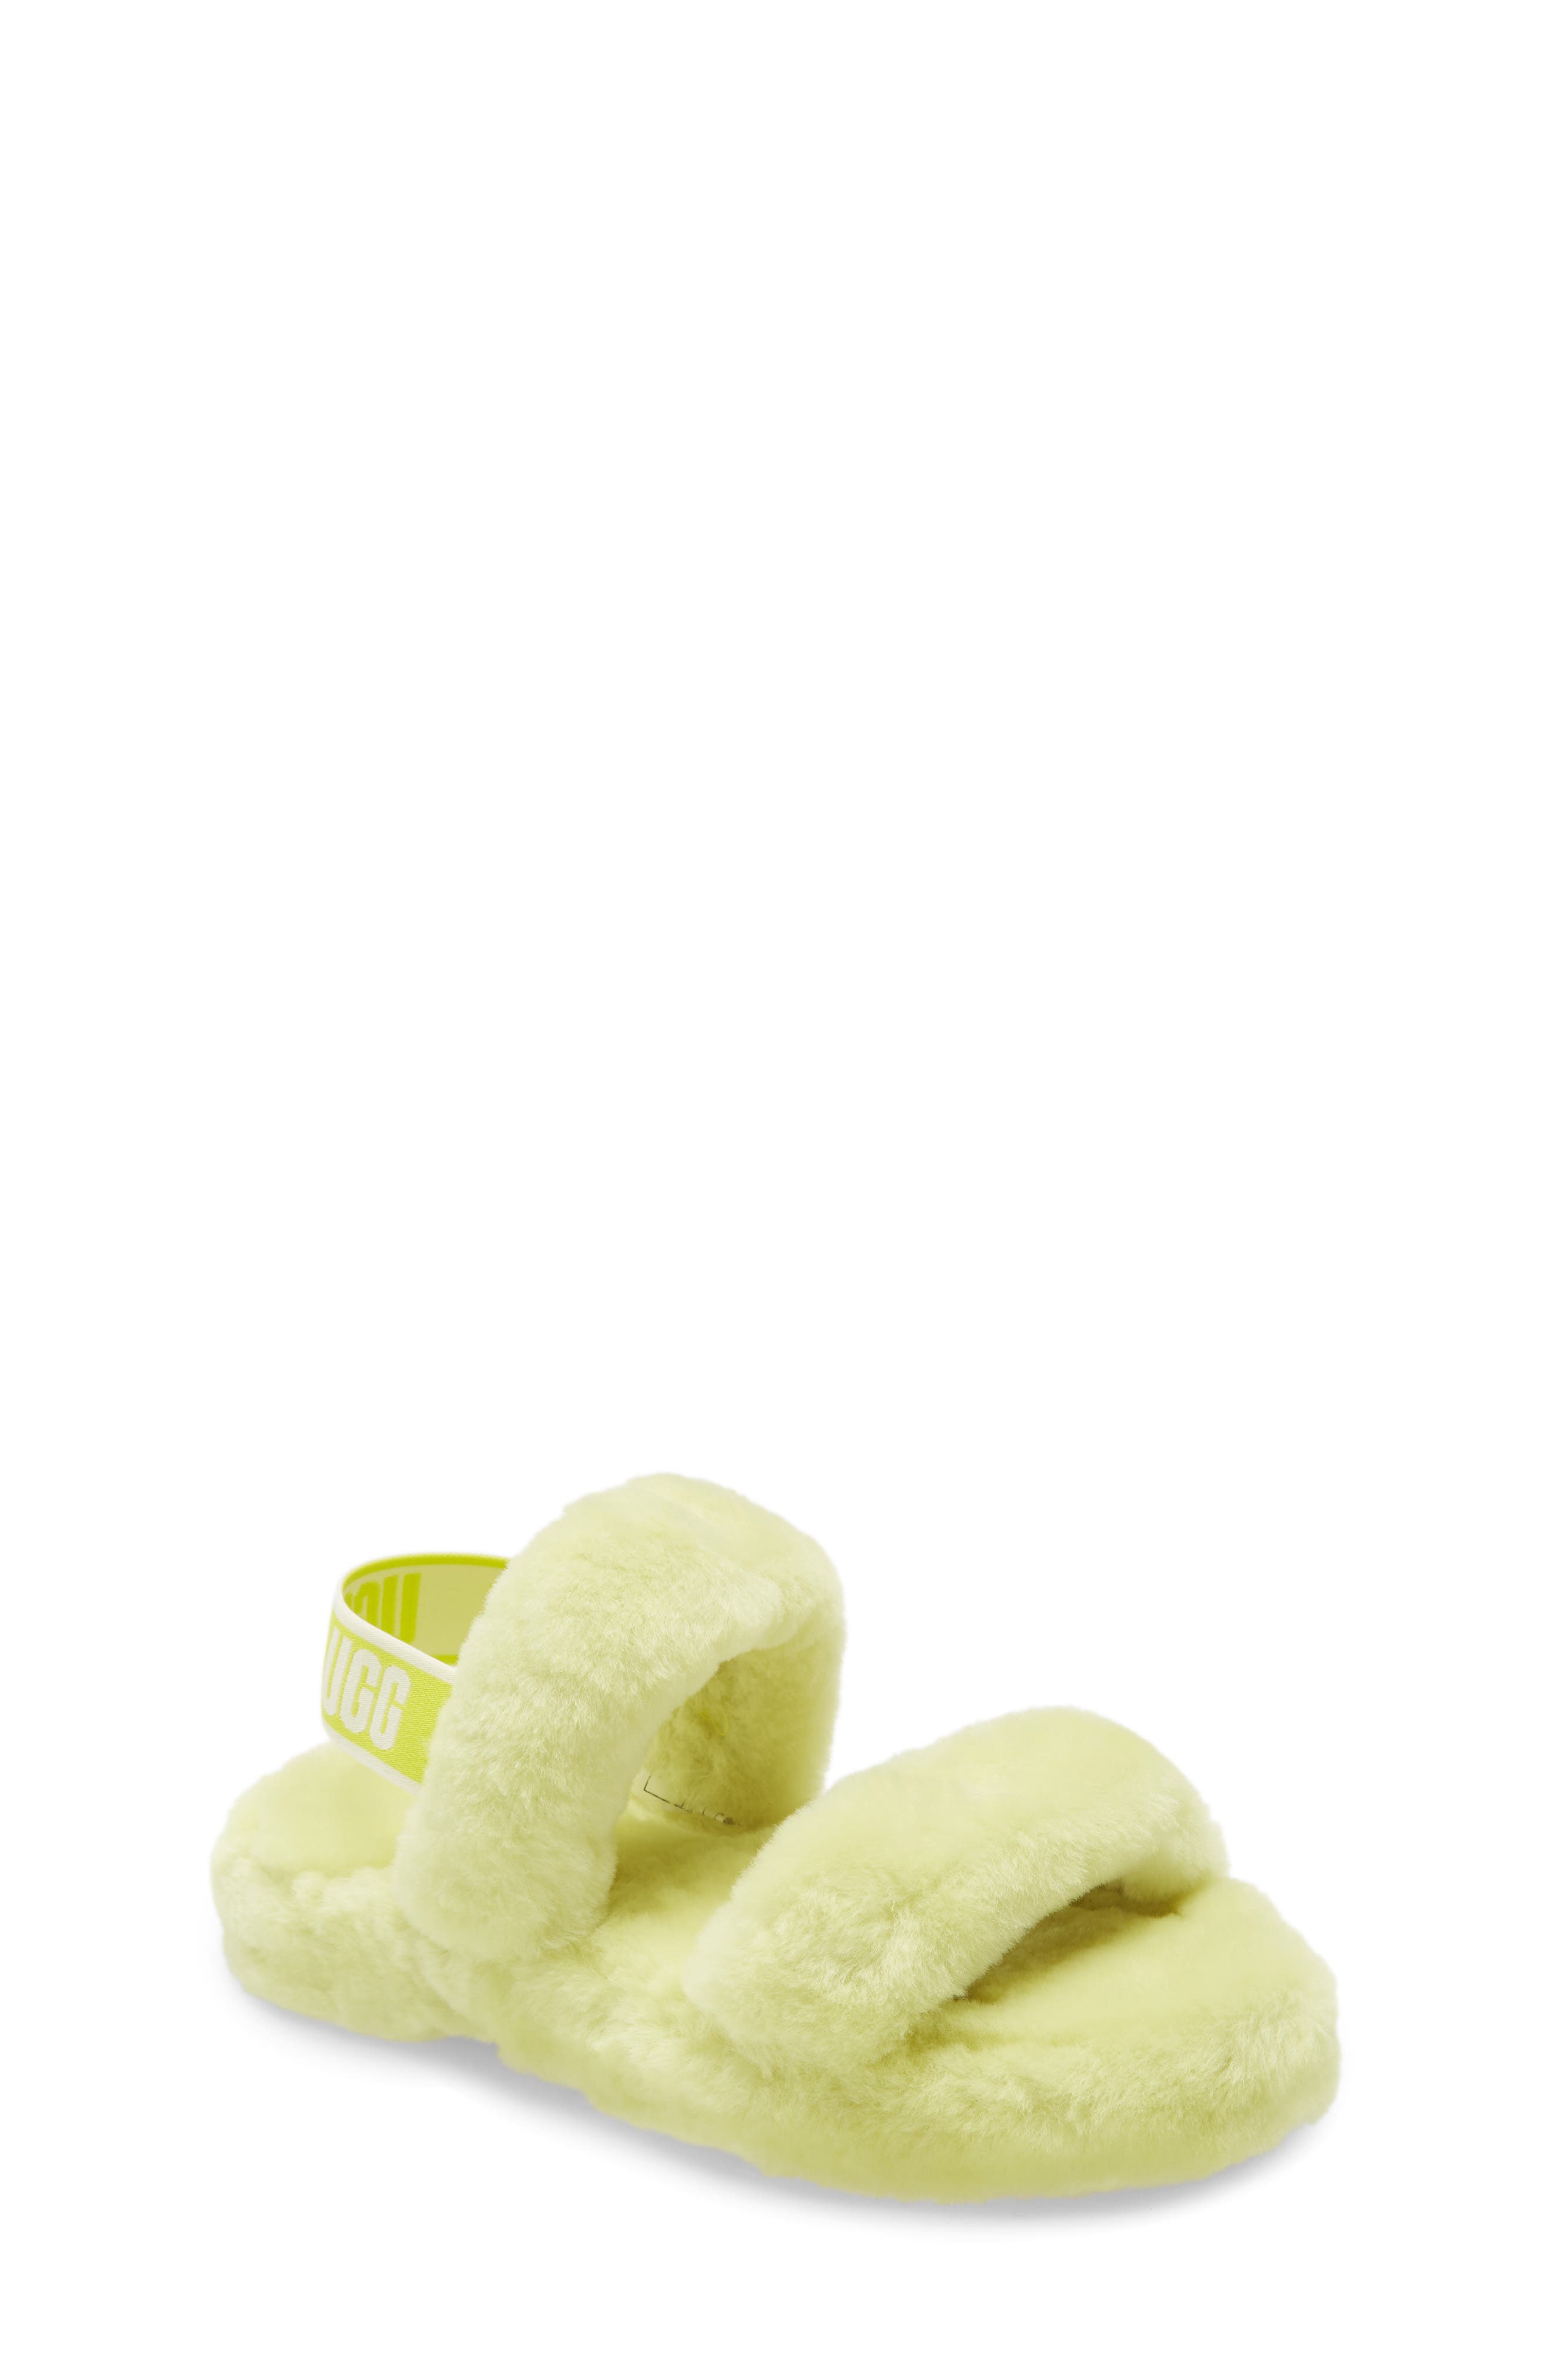 baby yellow ugg slippers